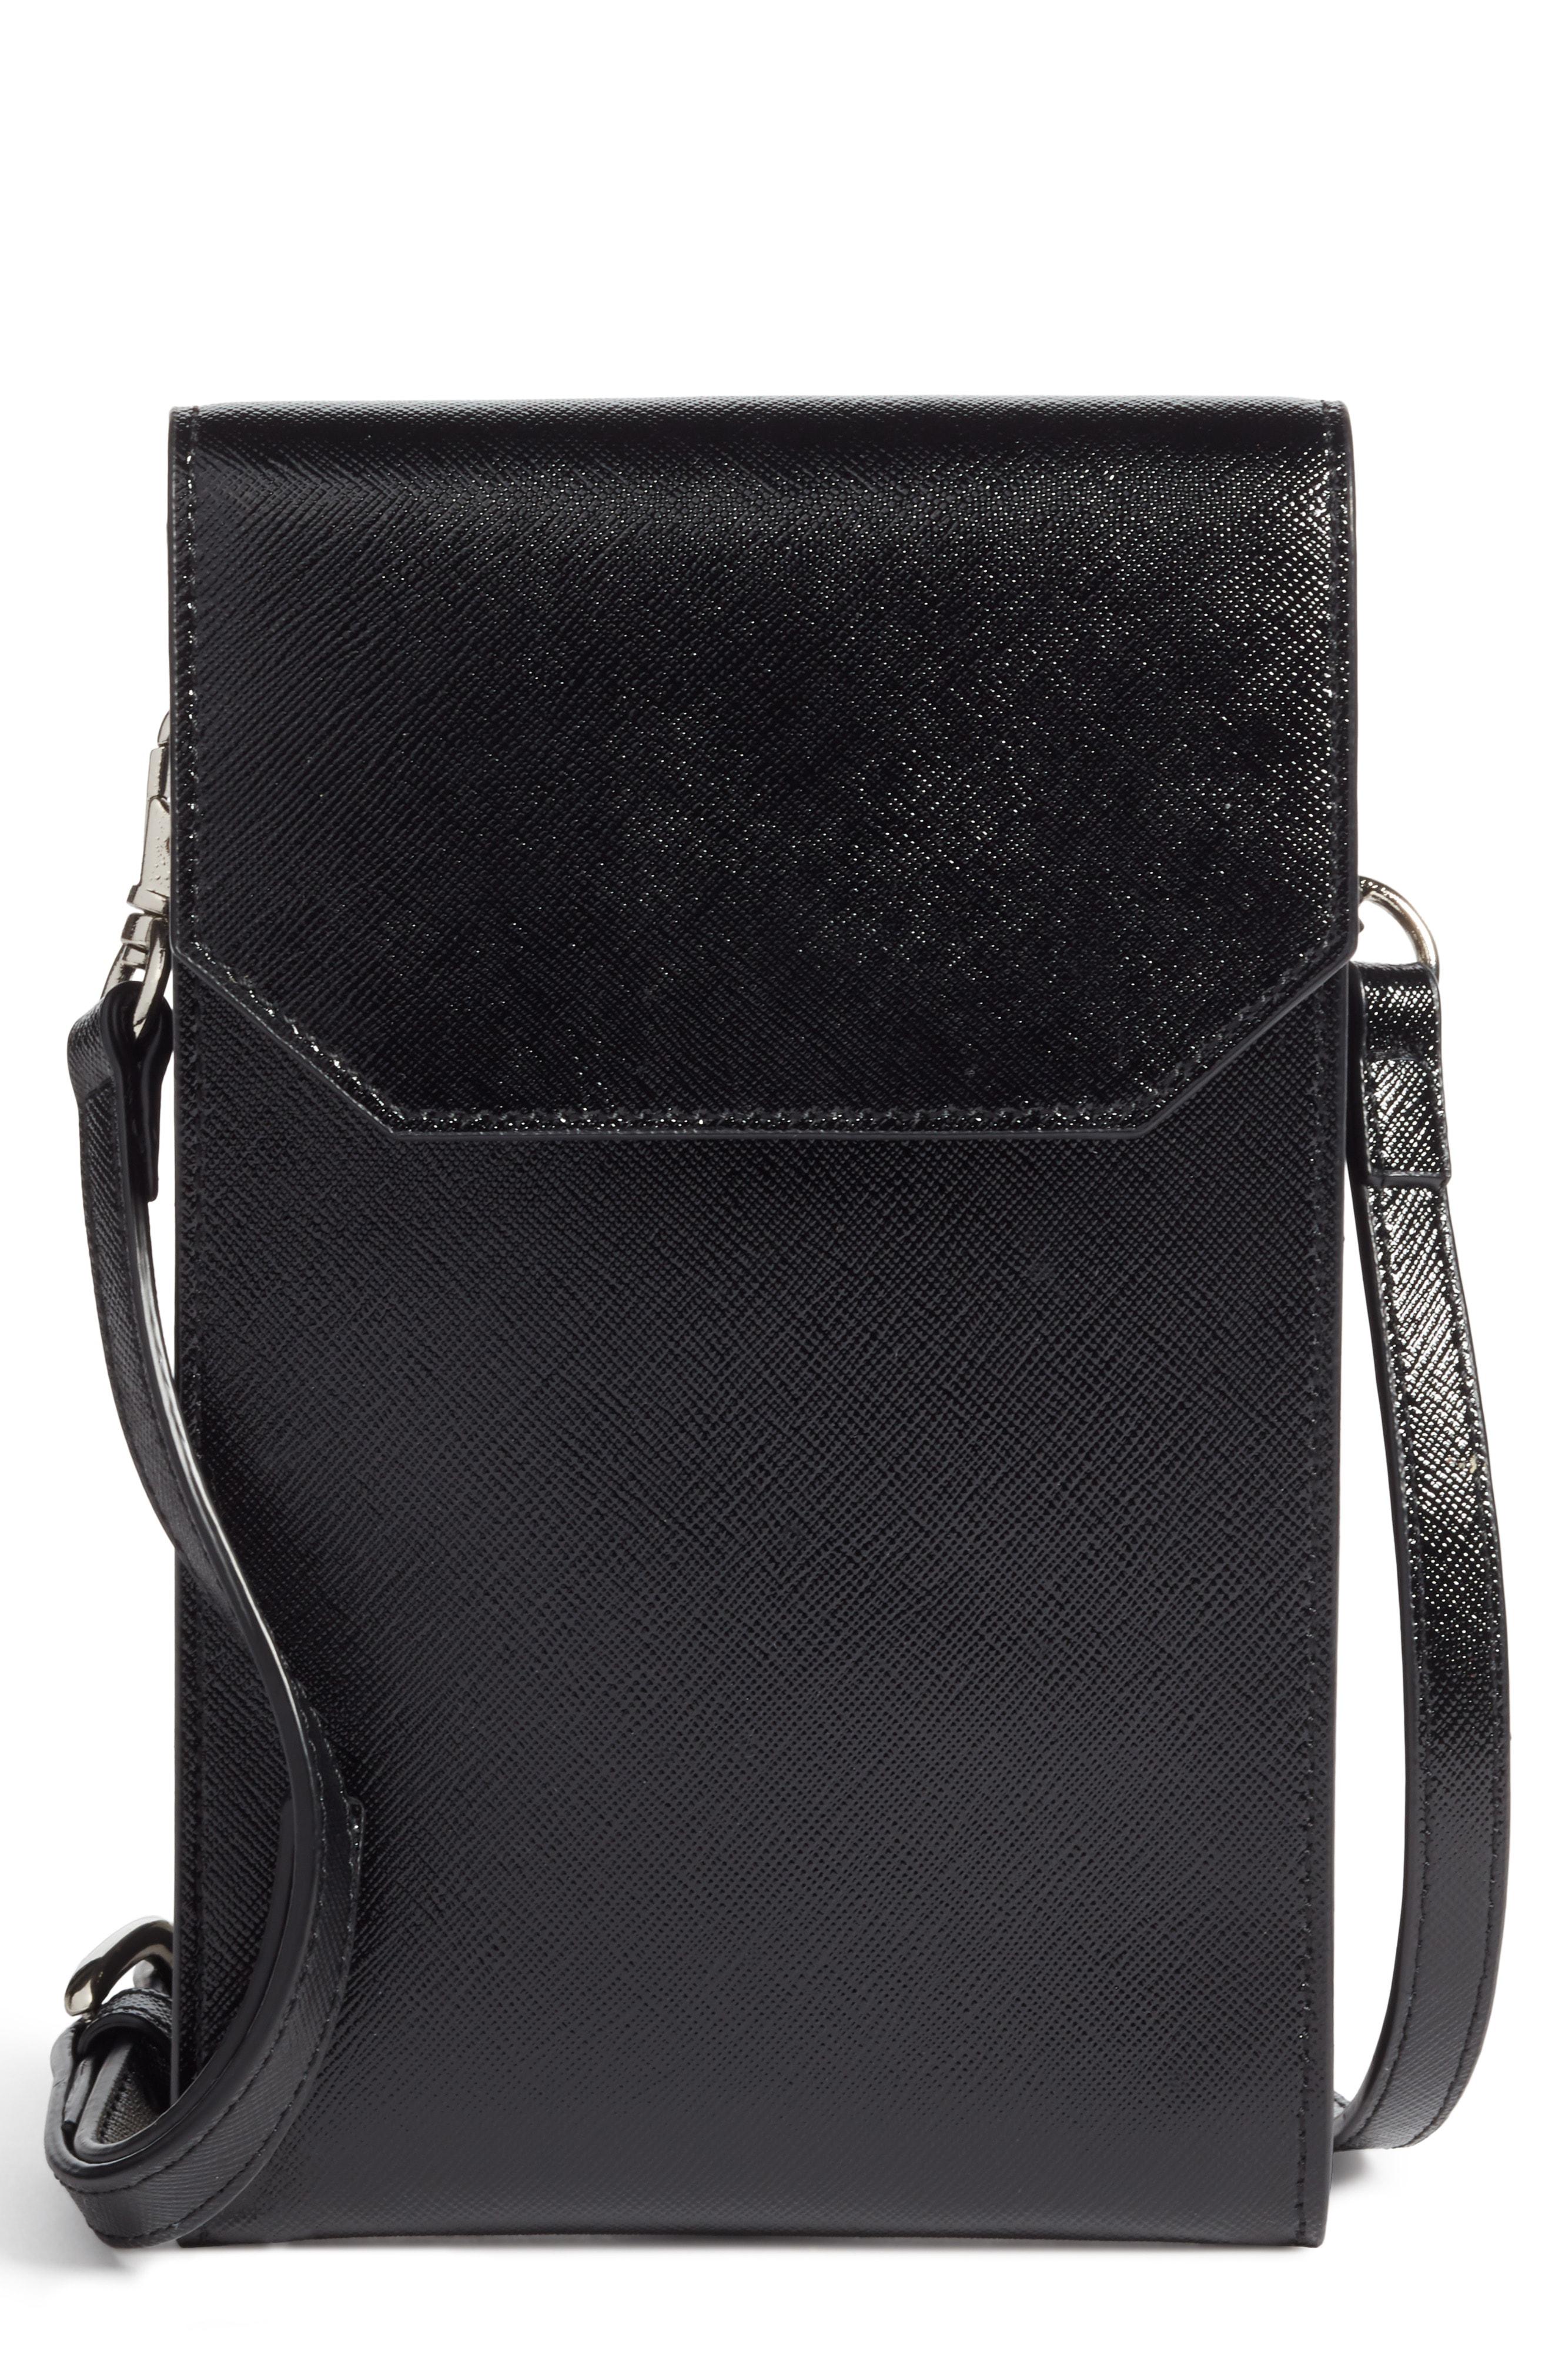 Lyst - Nordstrom Leather Phone Crossbody Bag - in Black